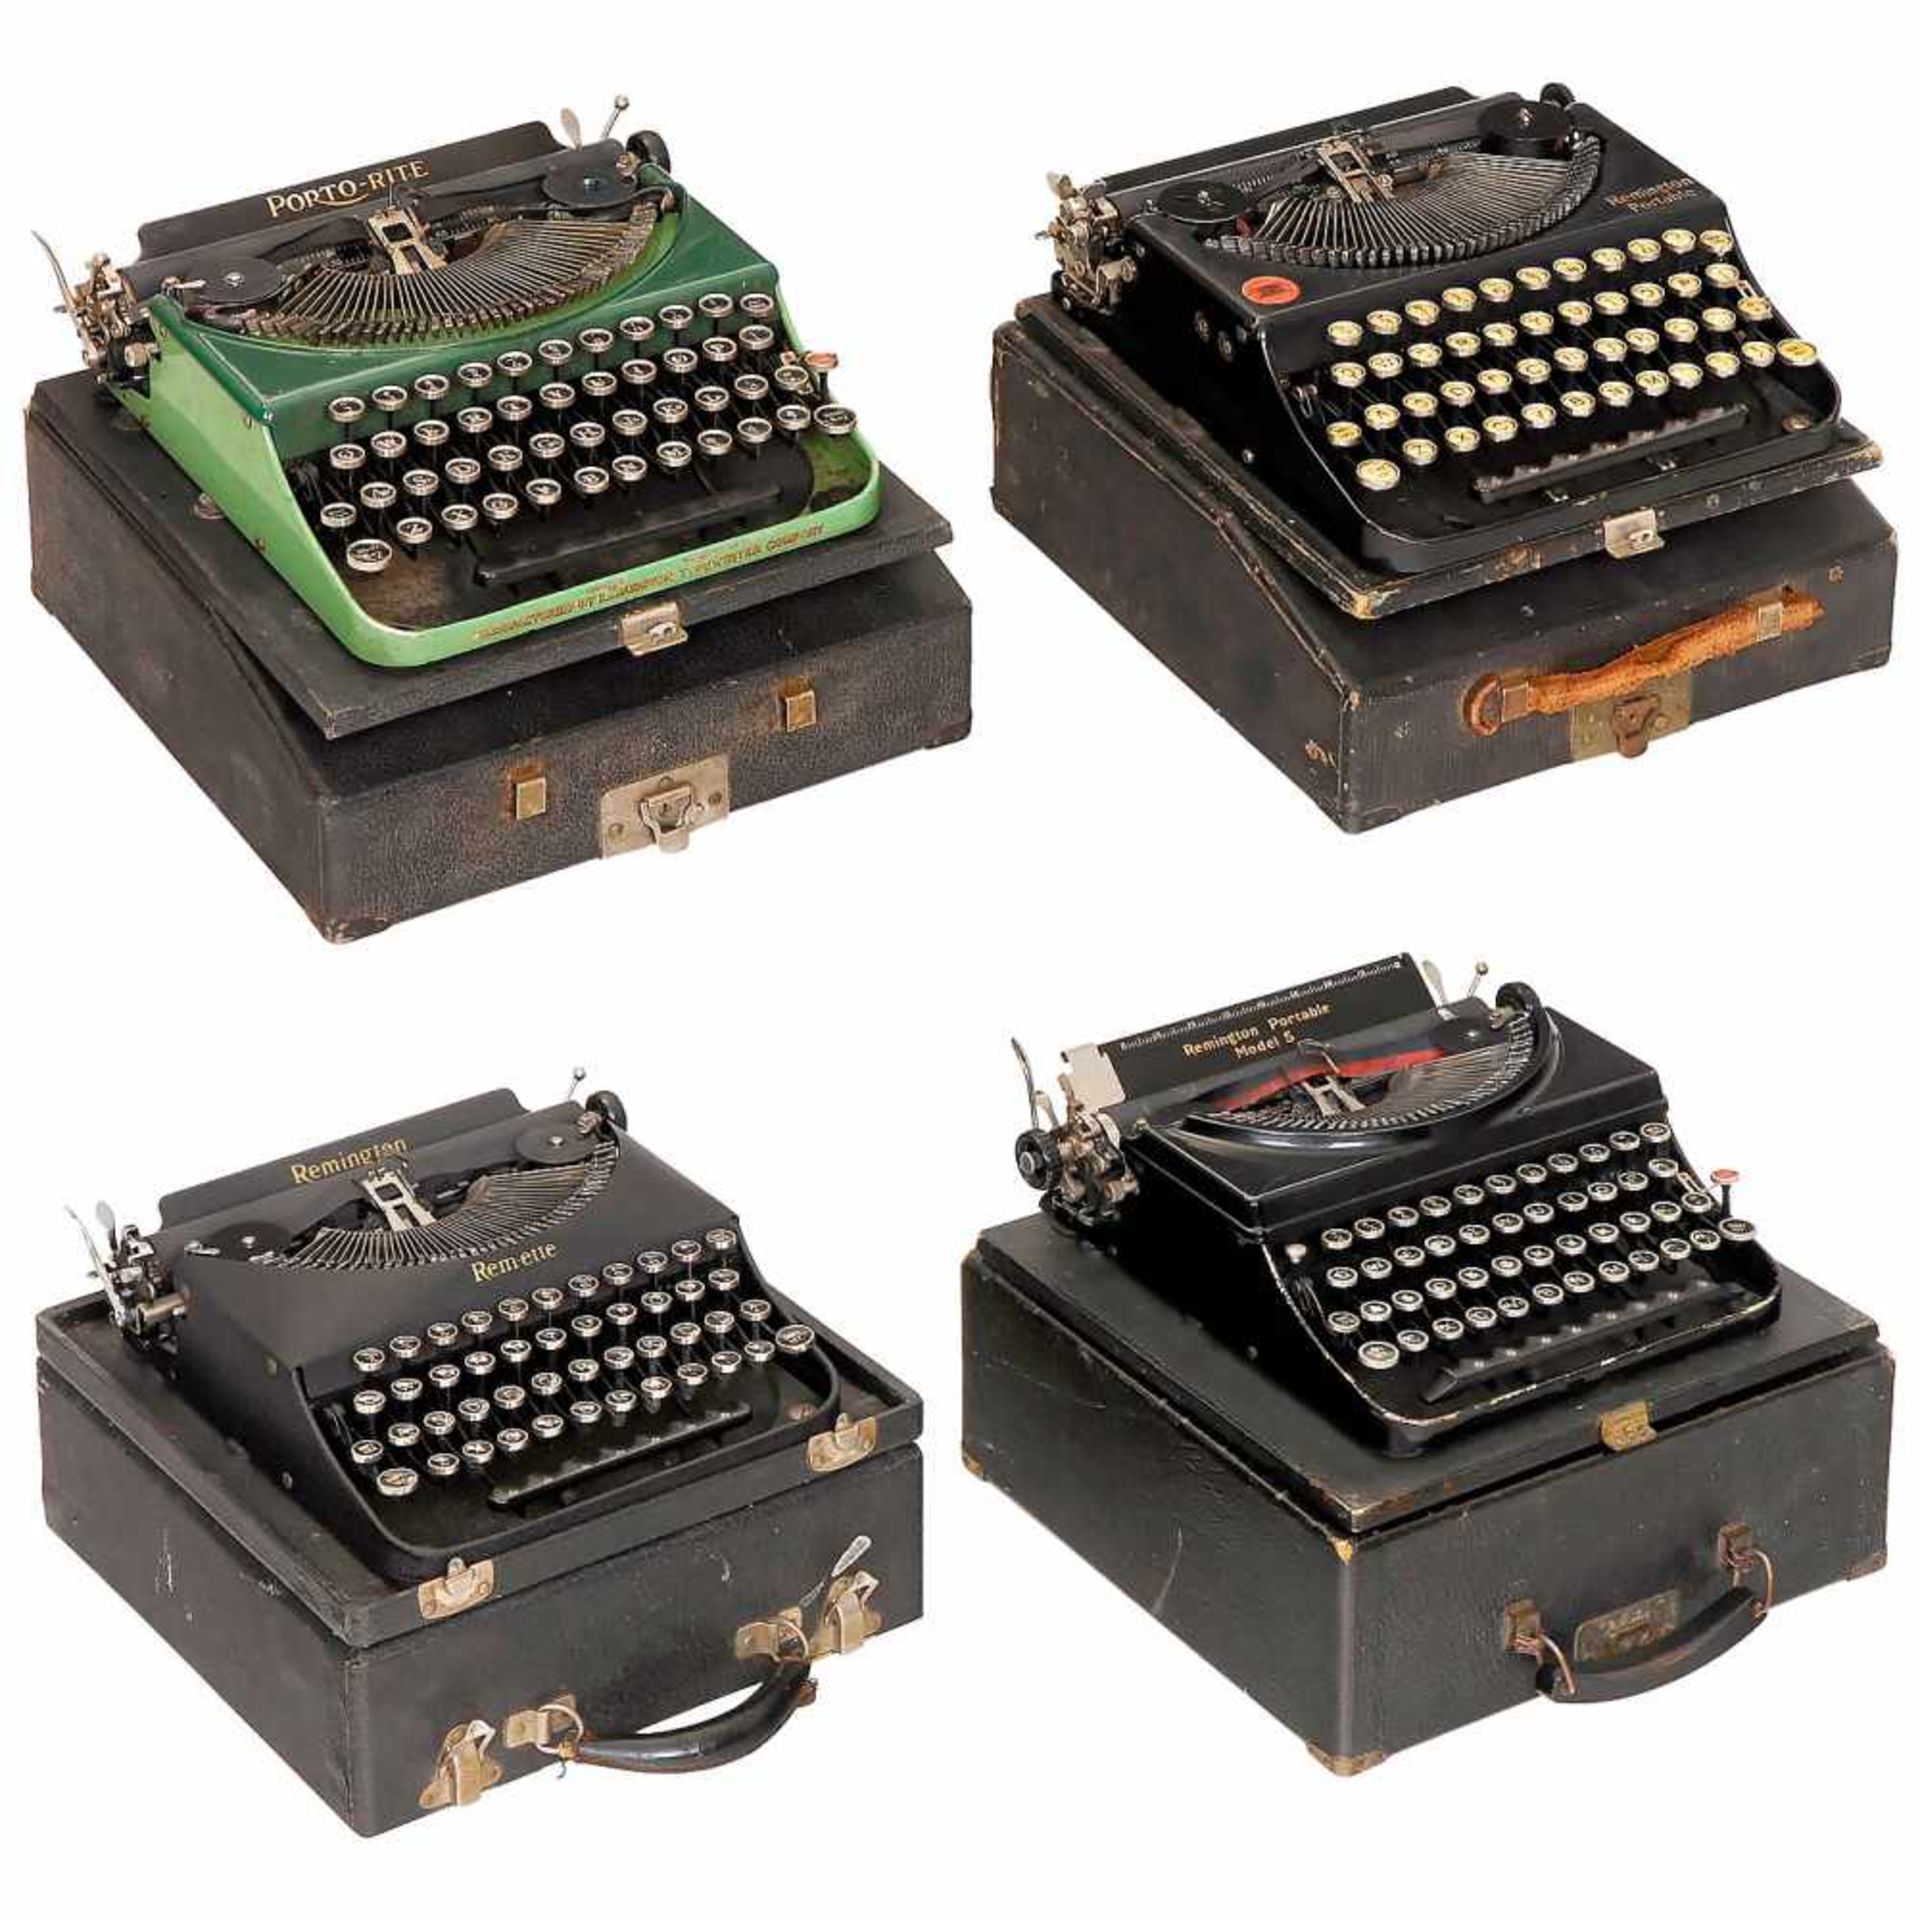 4 Remington Portable Typewriters1) Porto-Rite, green. - 2) Portable. - 3) Rem-ette. - And: 4)